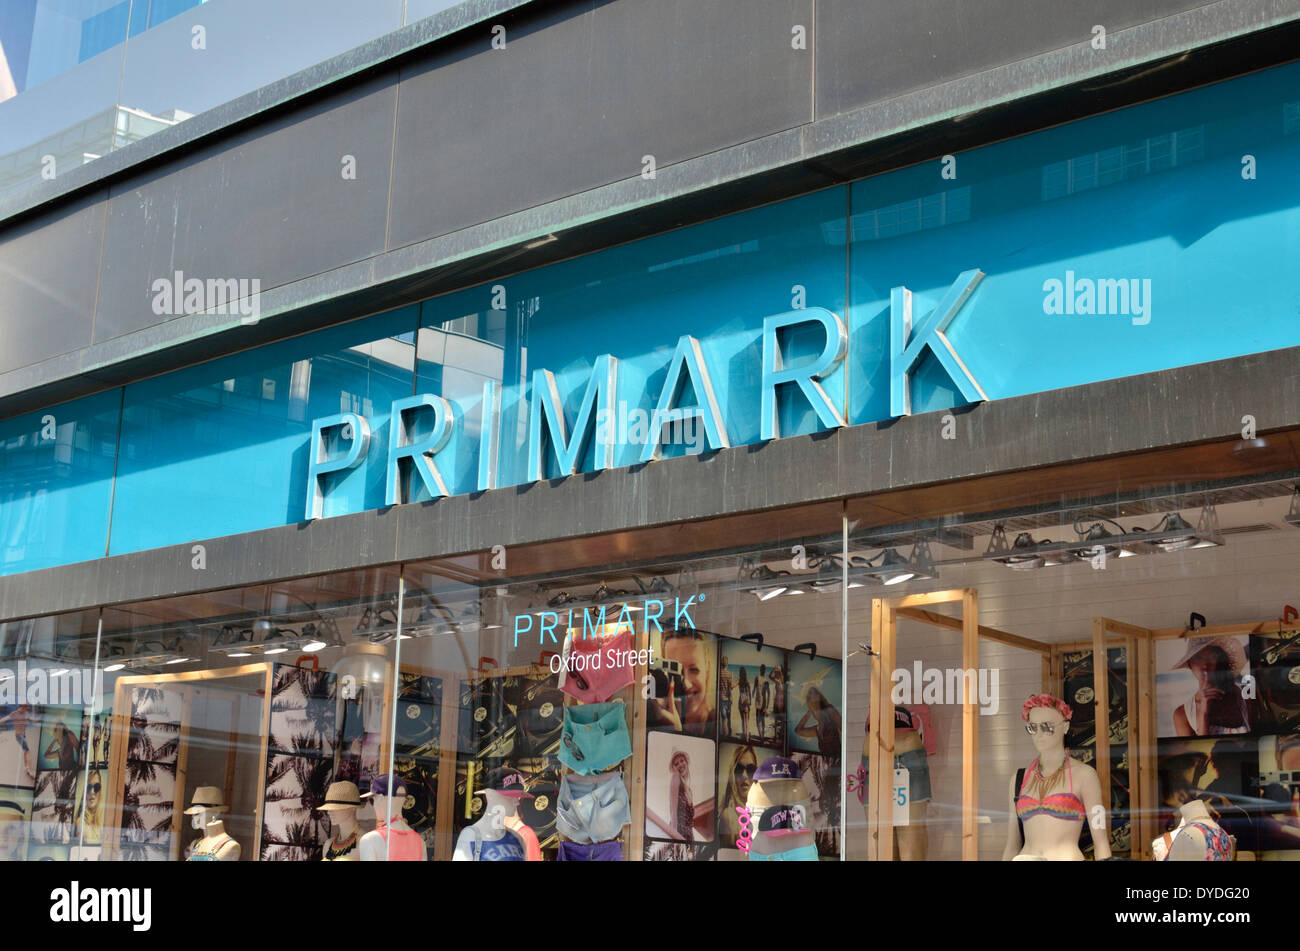 Primark Oxford Street store. Stock Photo